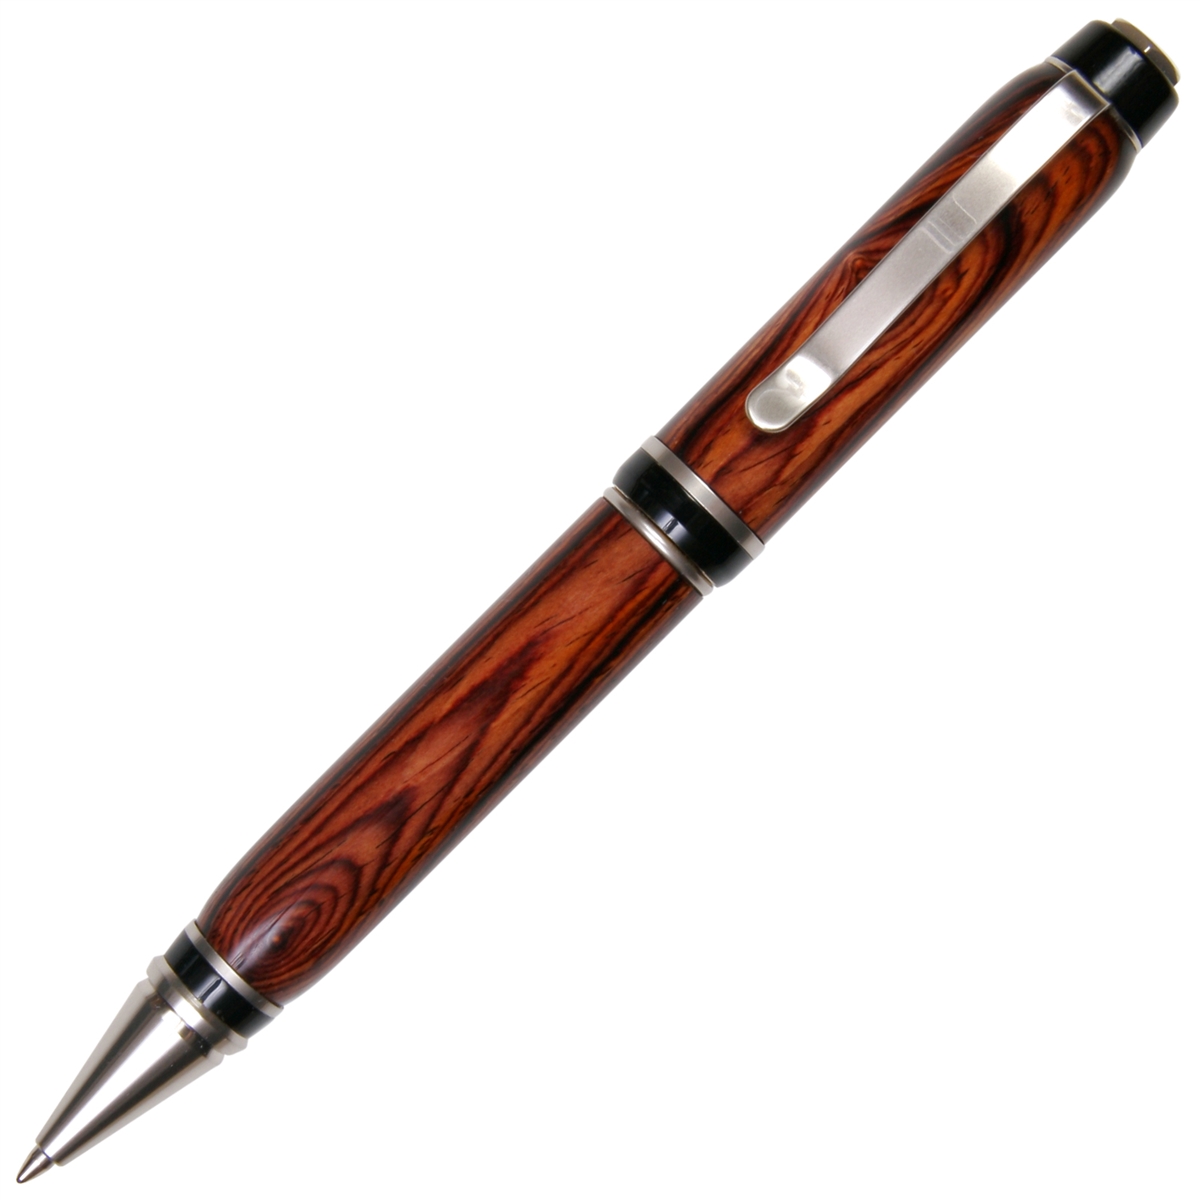 Cocobolo Cigar Twist Pen - Lanier Pens